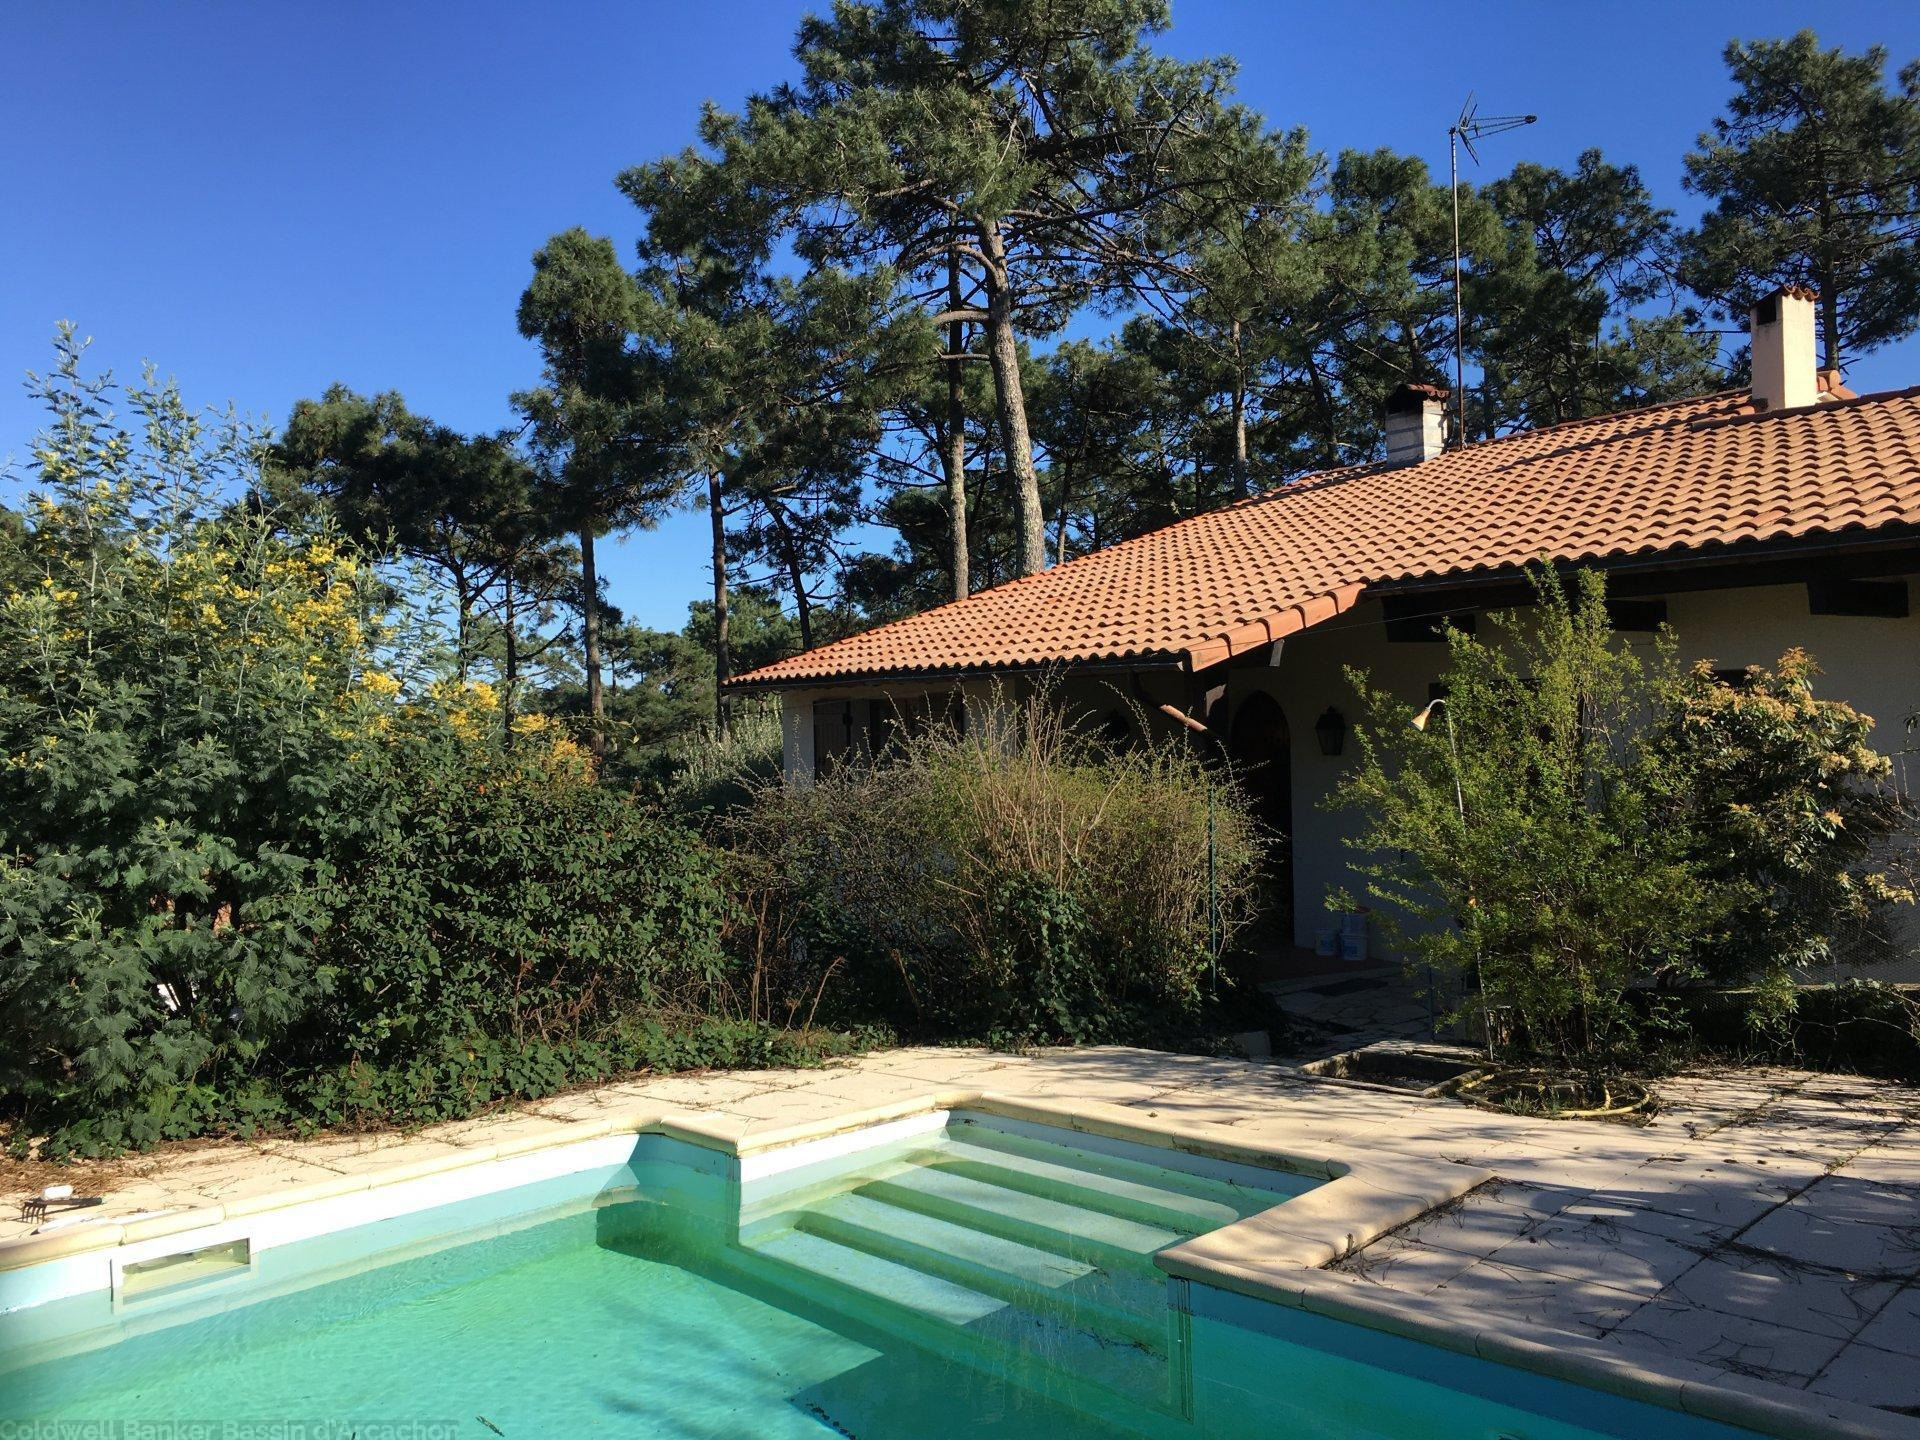 Villa à vendre - Lege Cap Ferret - Piraillan - 5 chambres avec piscine sur un grand terrain